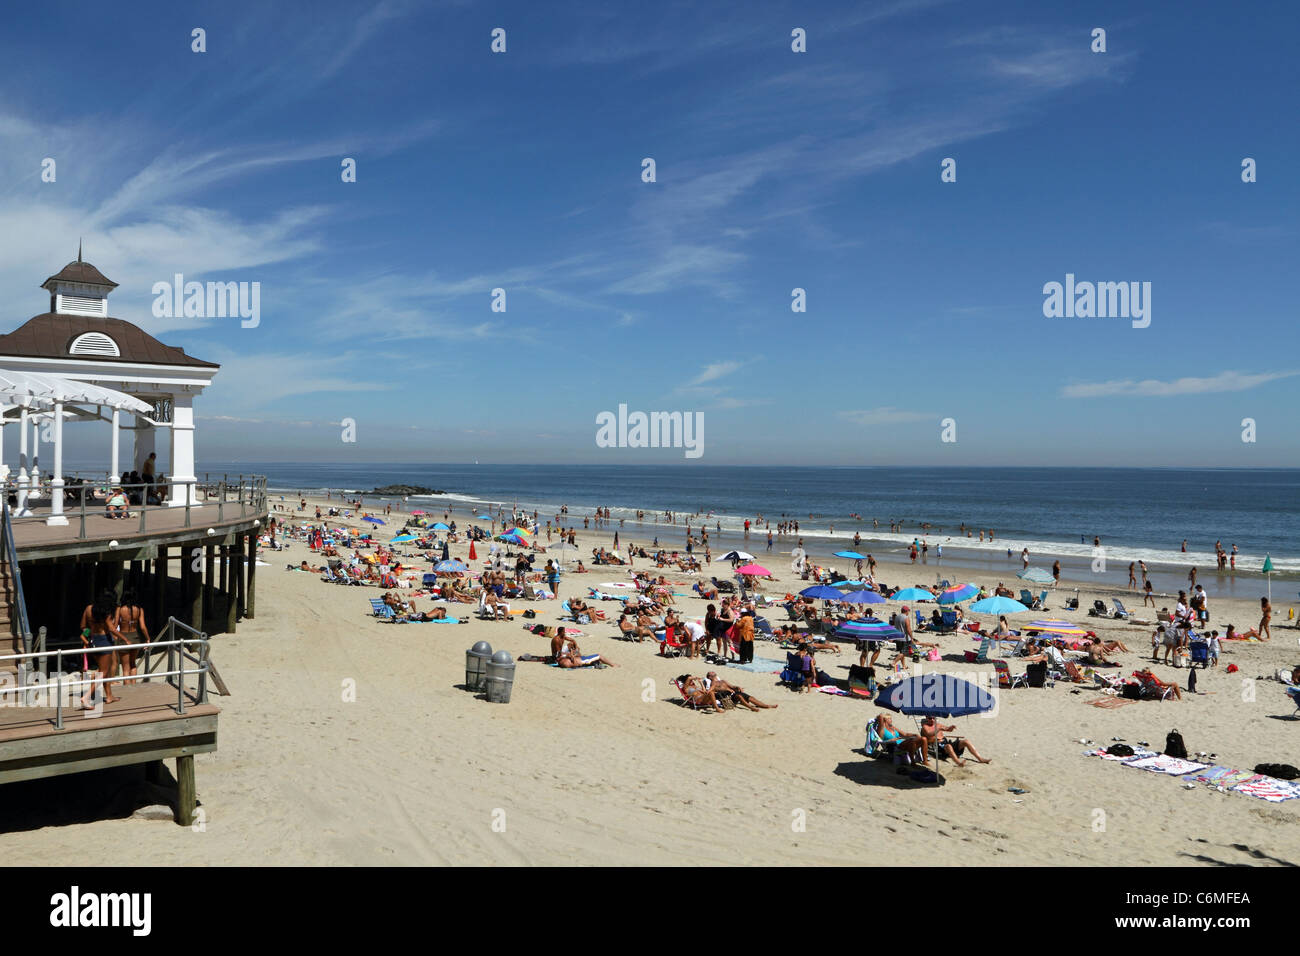 The beach in Long Branch, New Jersey, USA. A popular shore destination. Stock Photo